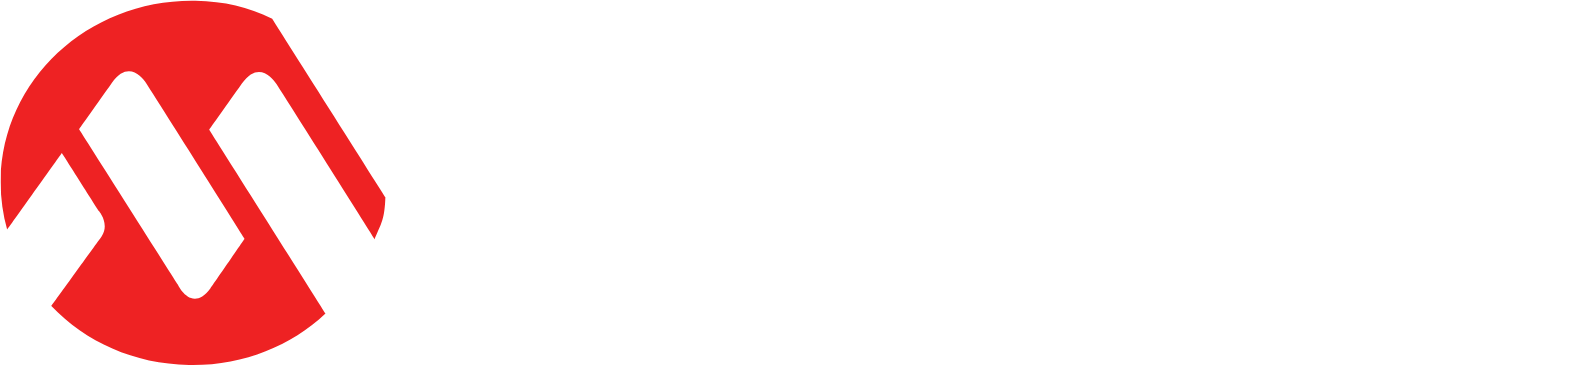 Microchip Technology logo large for dark backgrounds (transparent PNG)